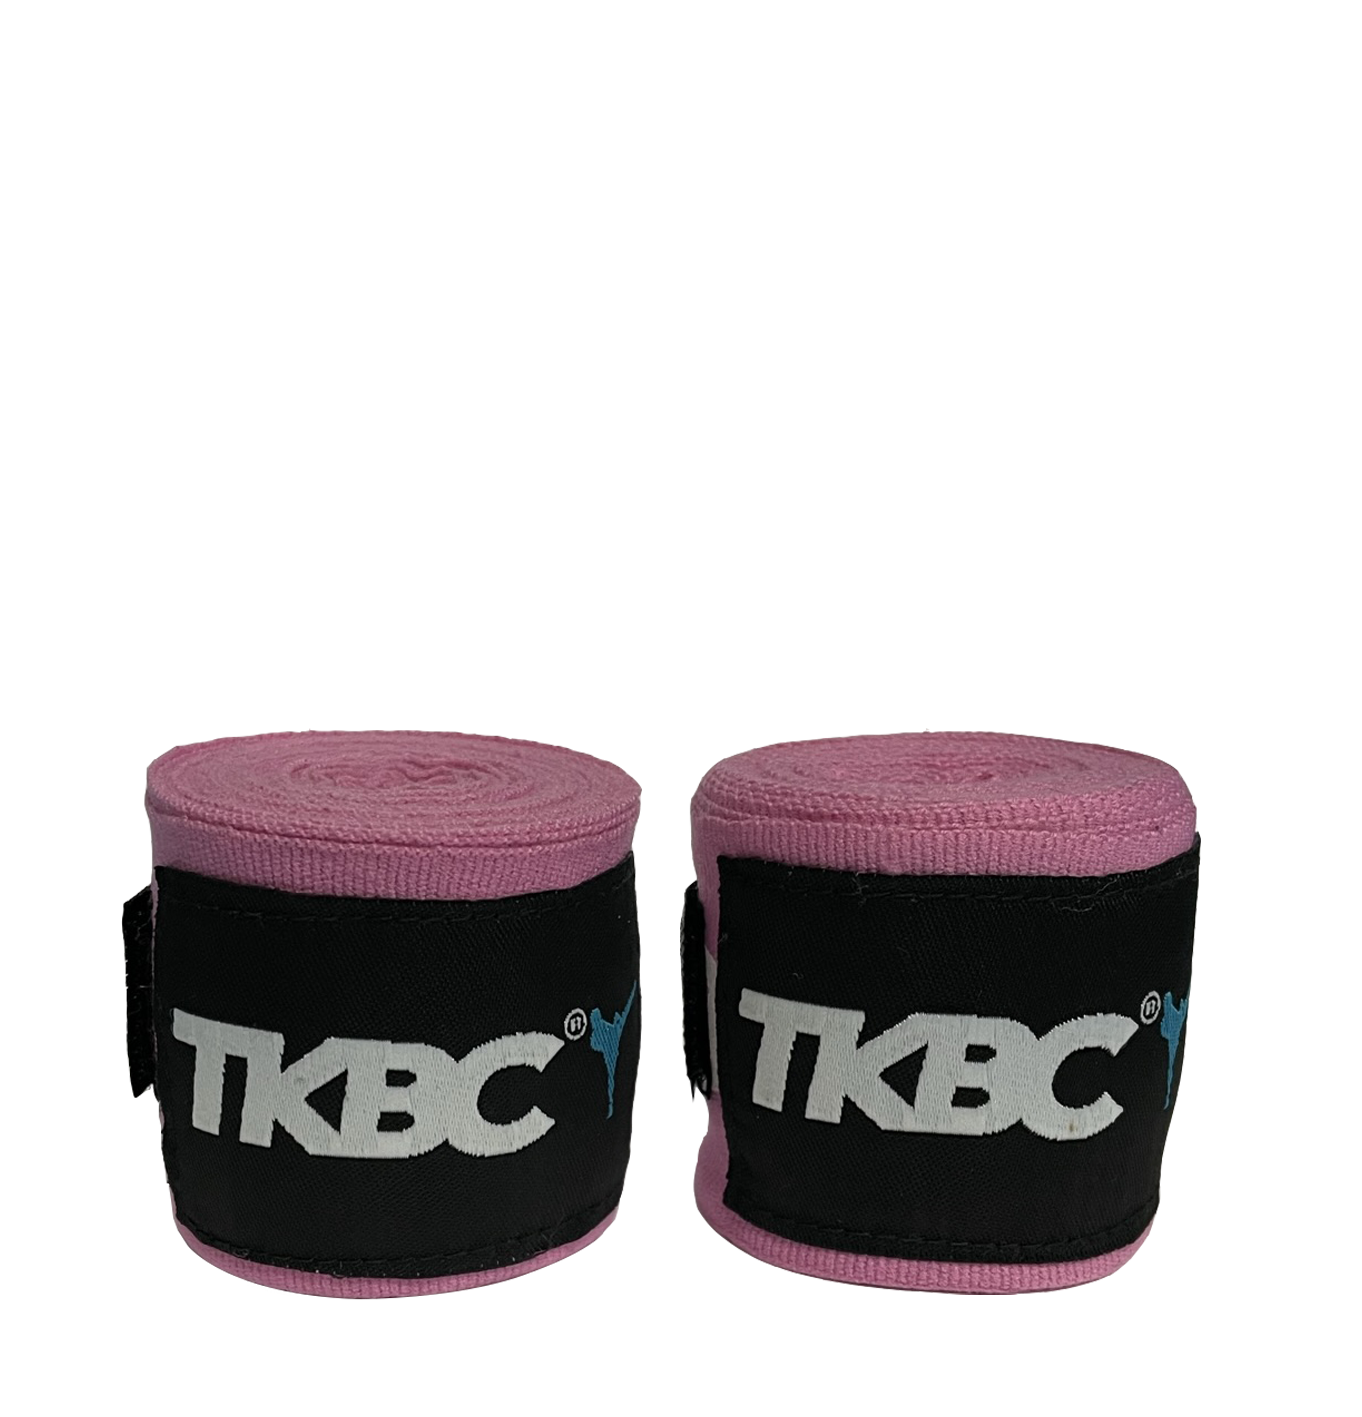 TKBC Bandage pink